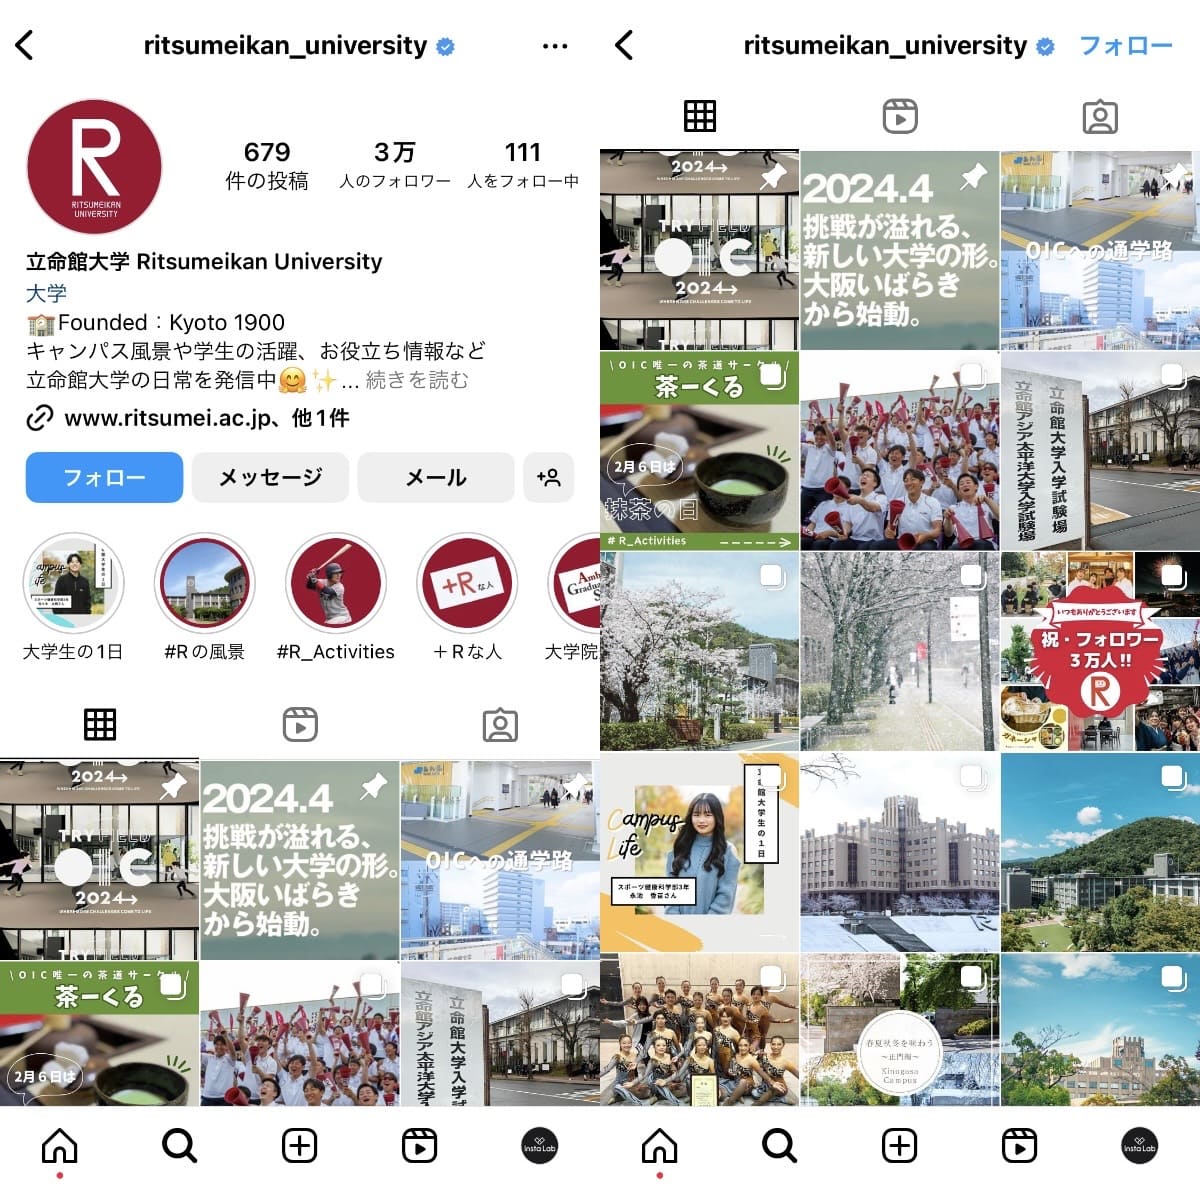 instagram-account-ritsumeikan-university